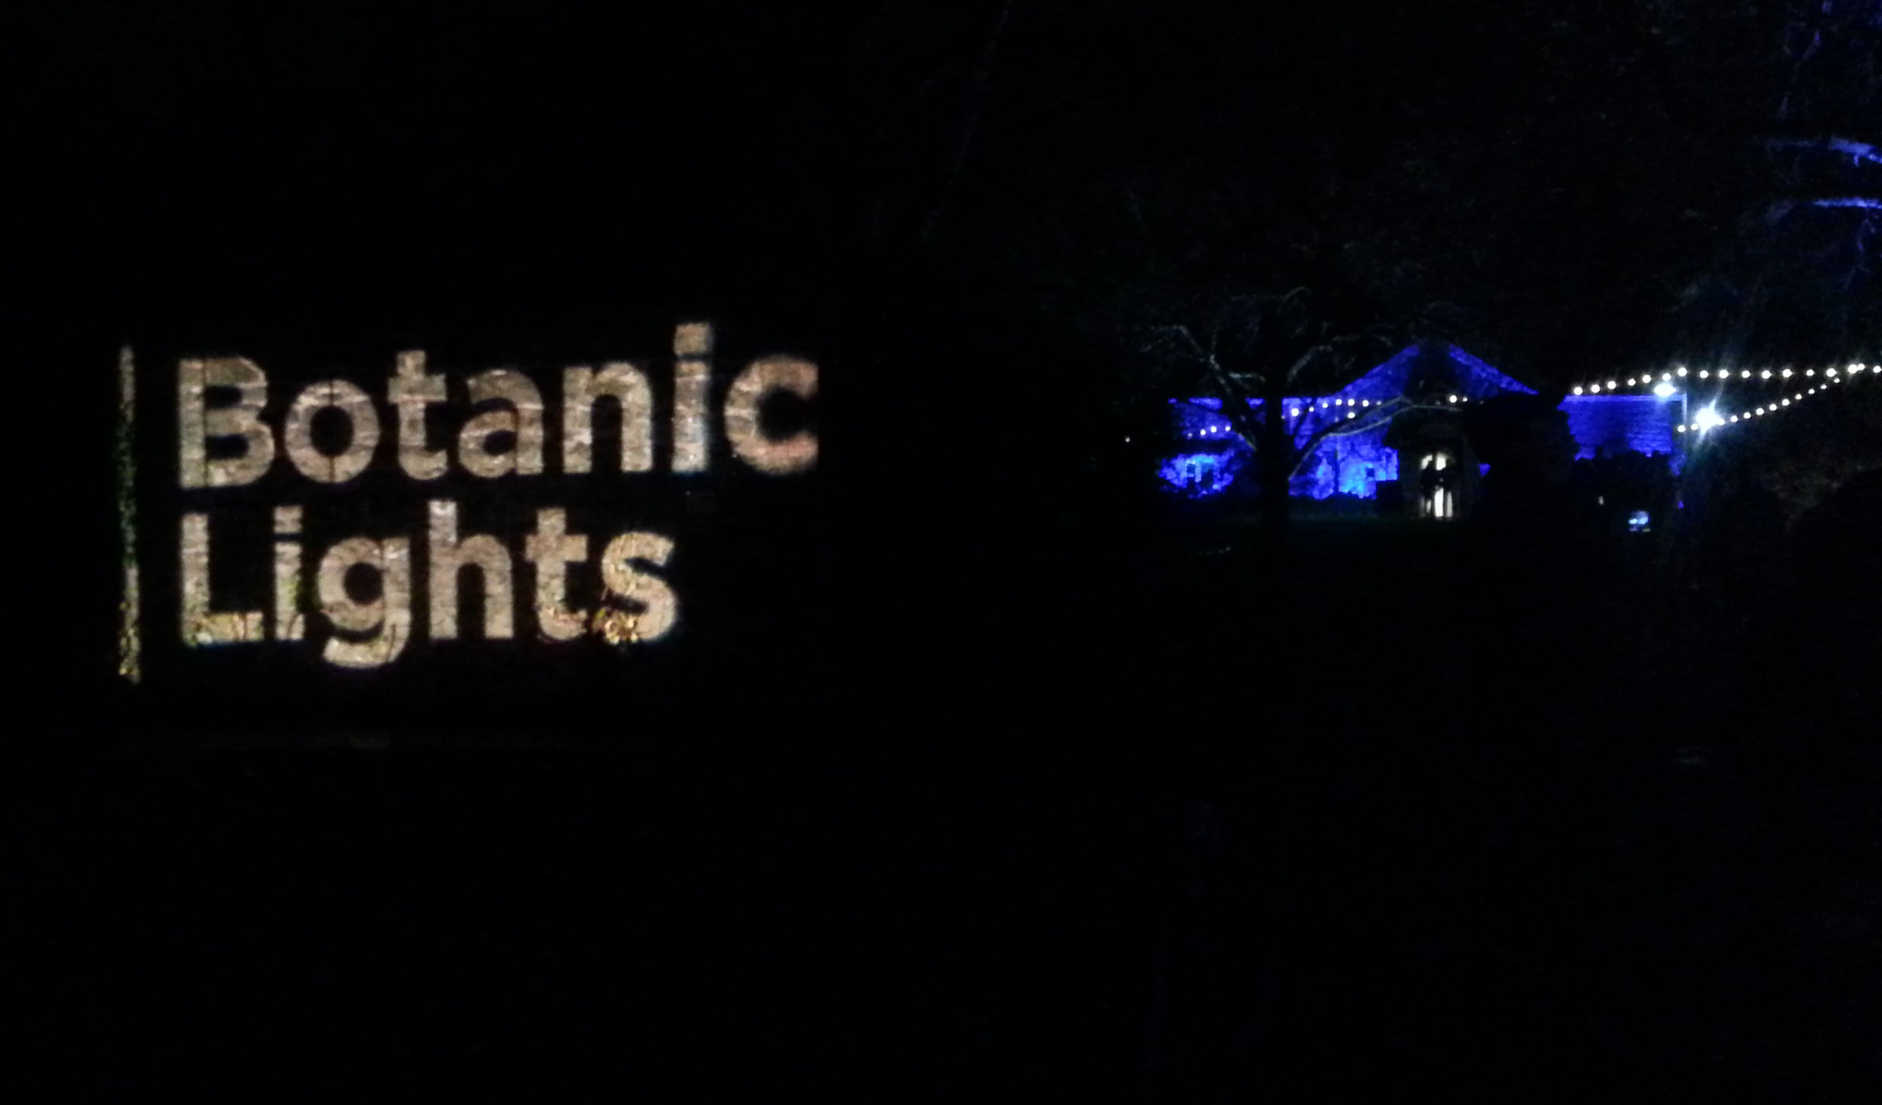 Botanic Lights